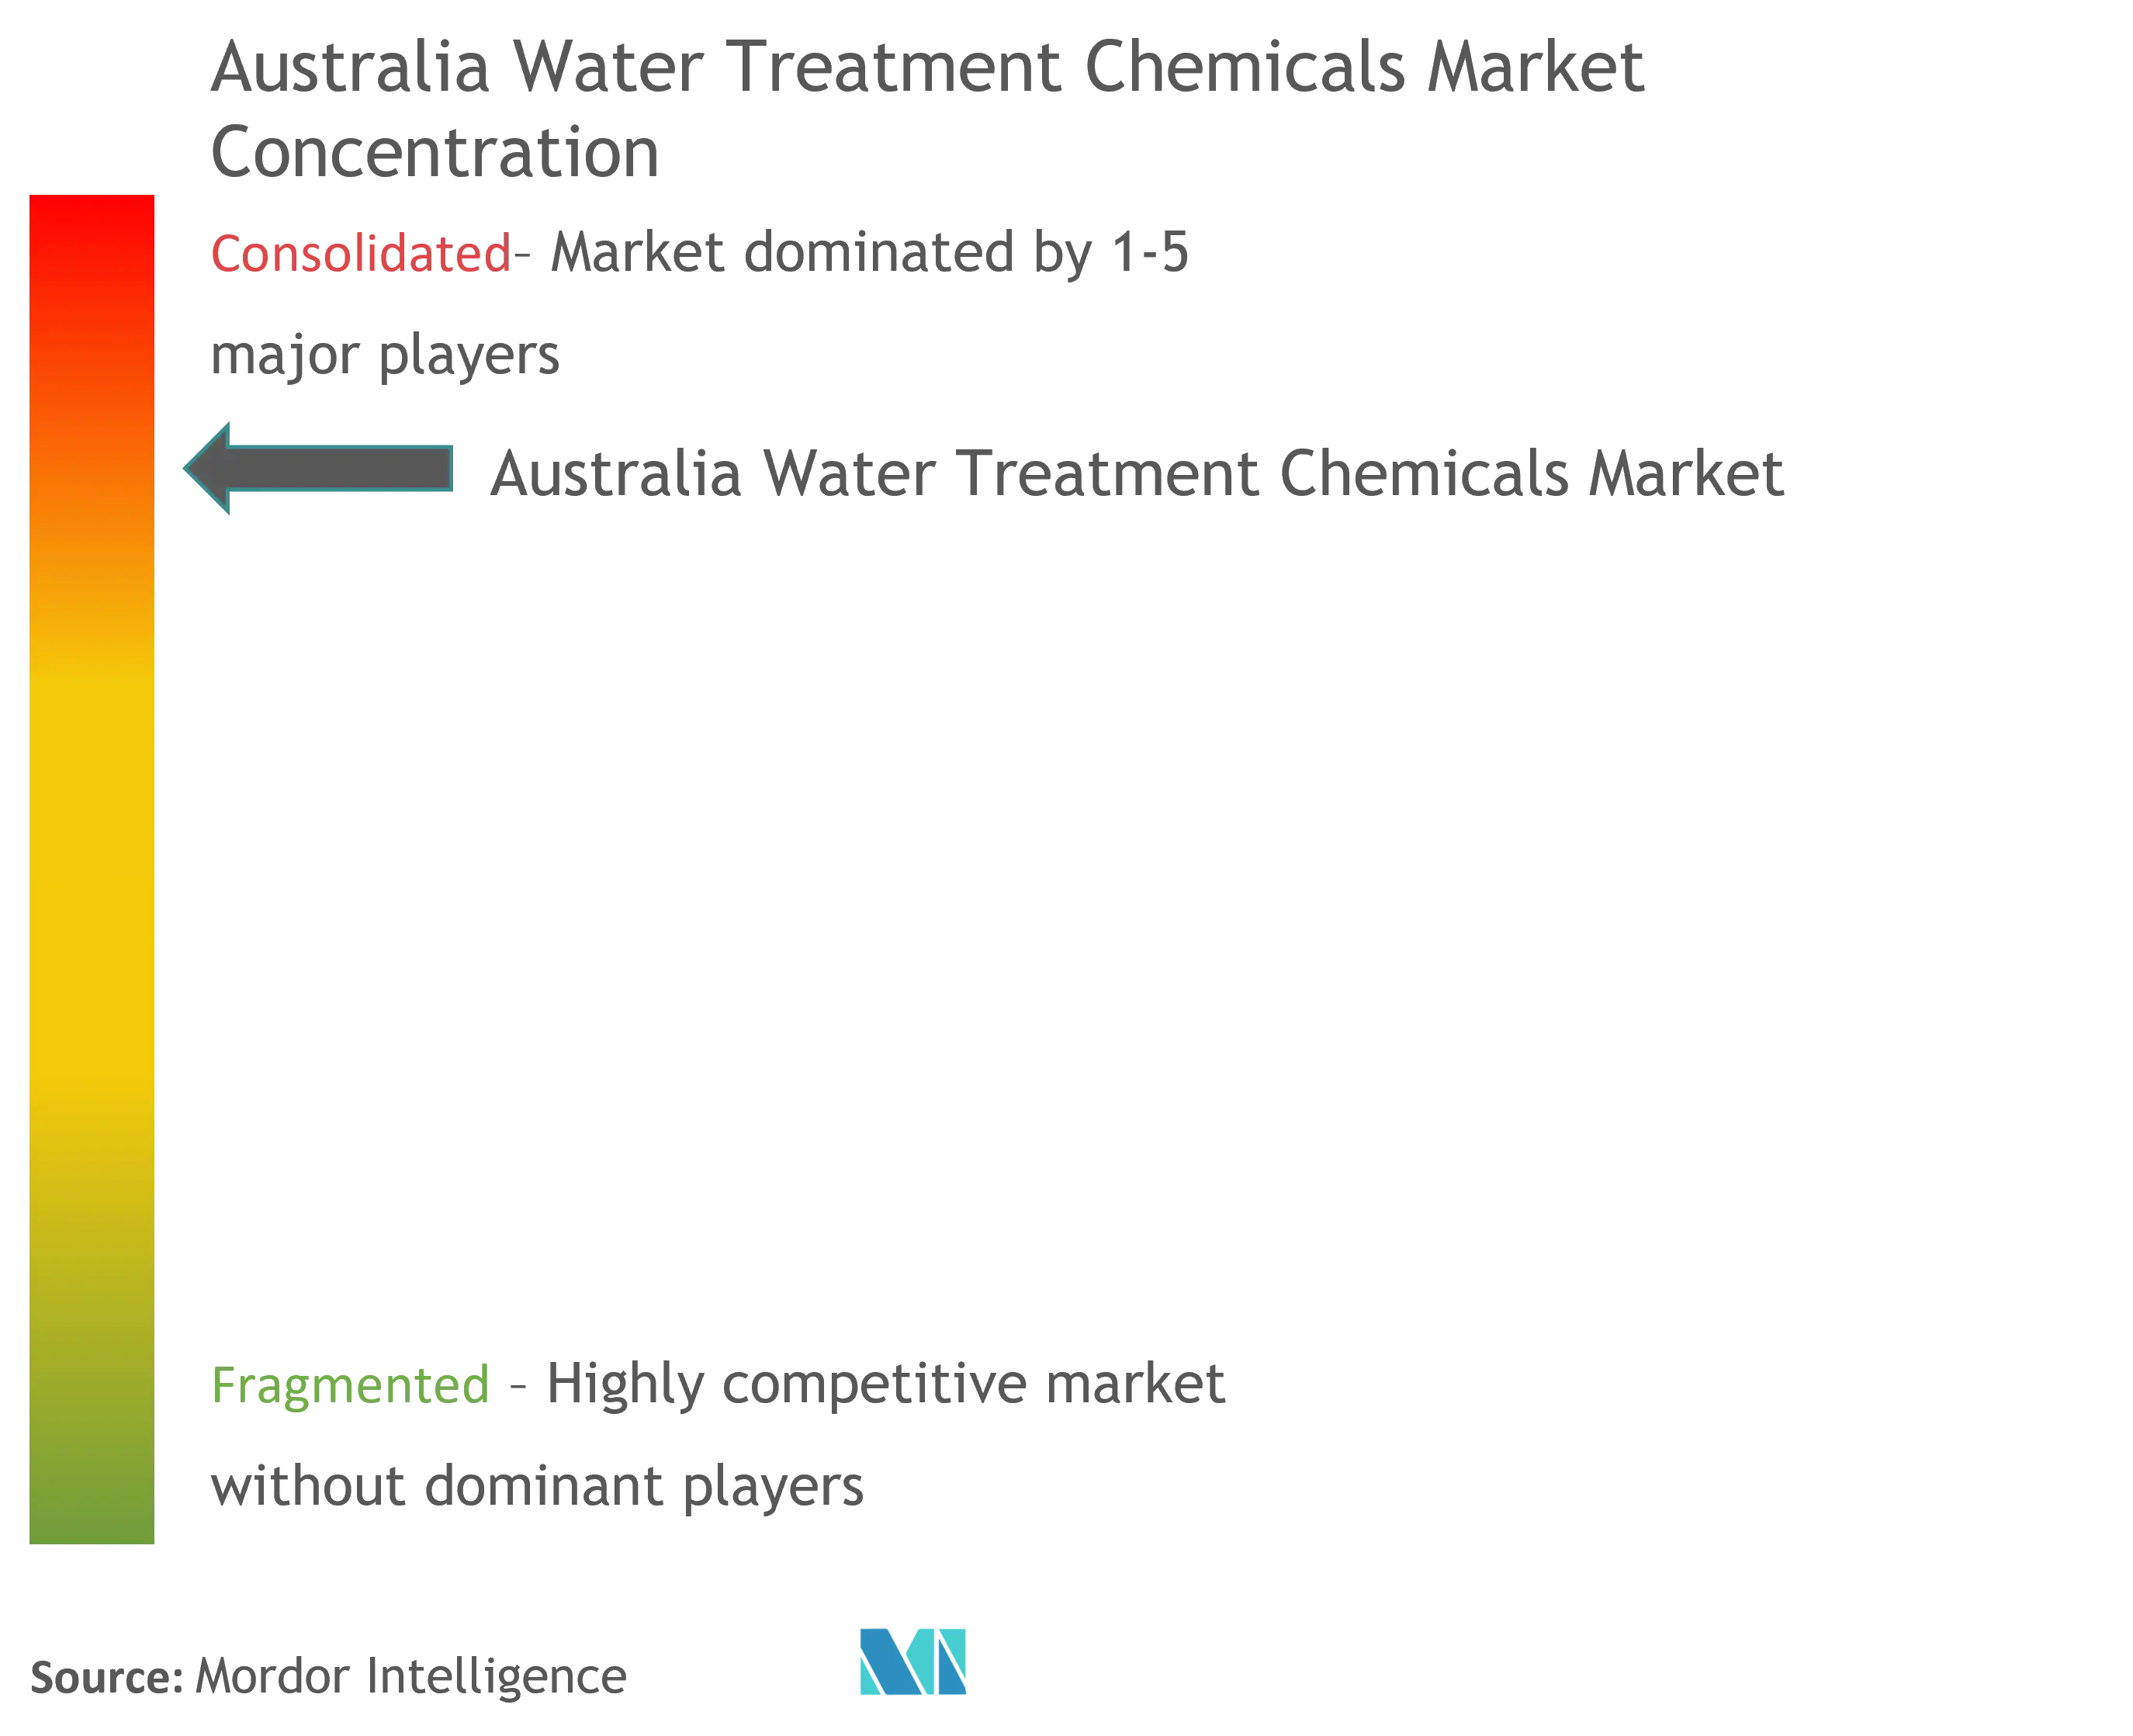 Australia Water Treatment Chemicals Market Concentration